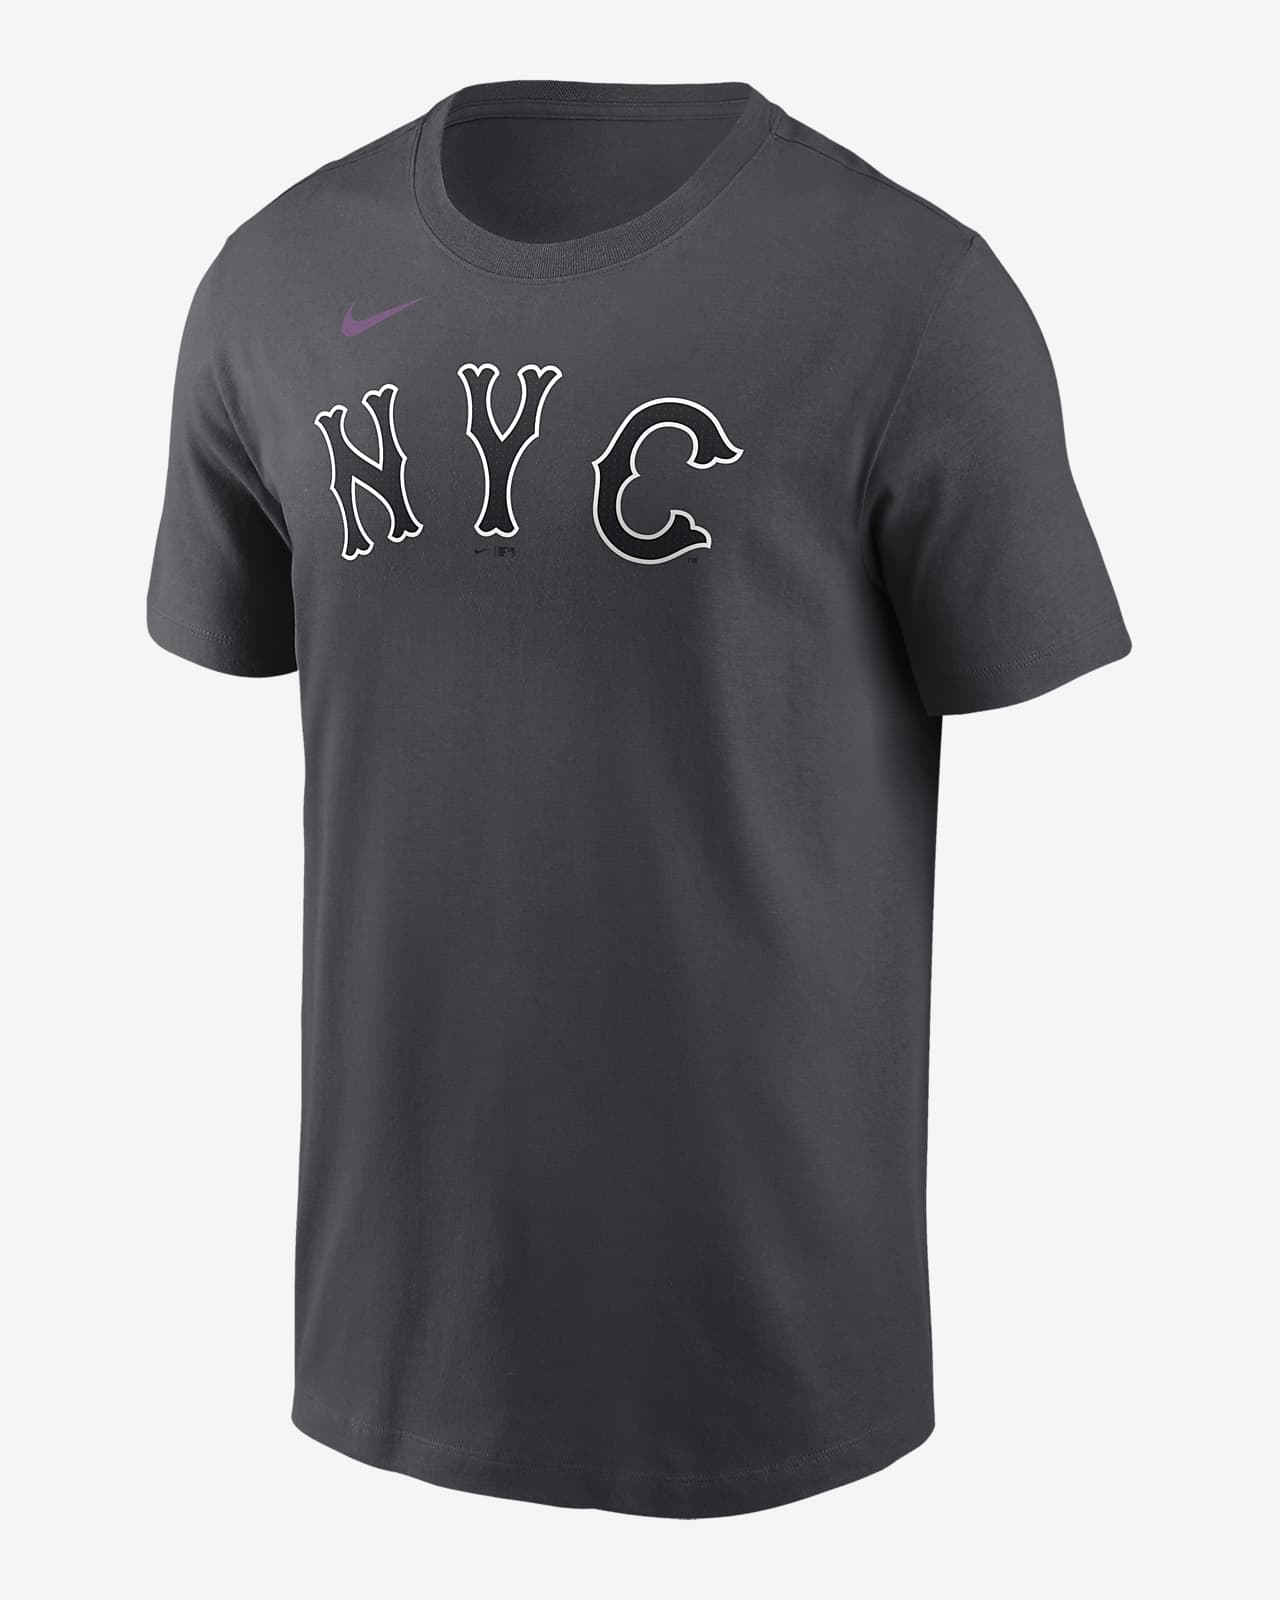 Francisco Lindor New York Mets City Connect Fuse Men's Nike MLB T-Shirt